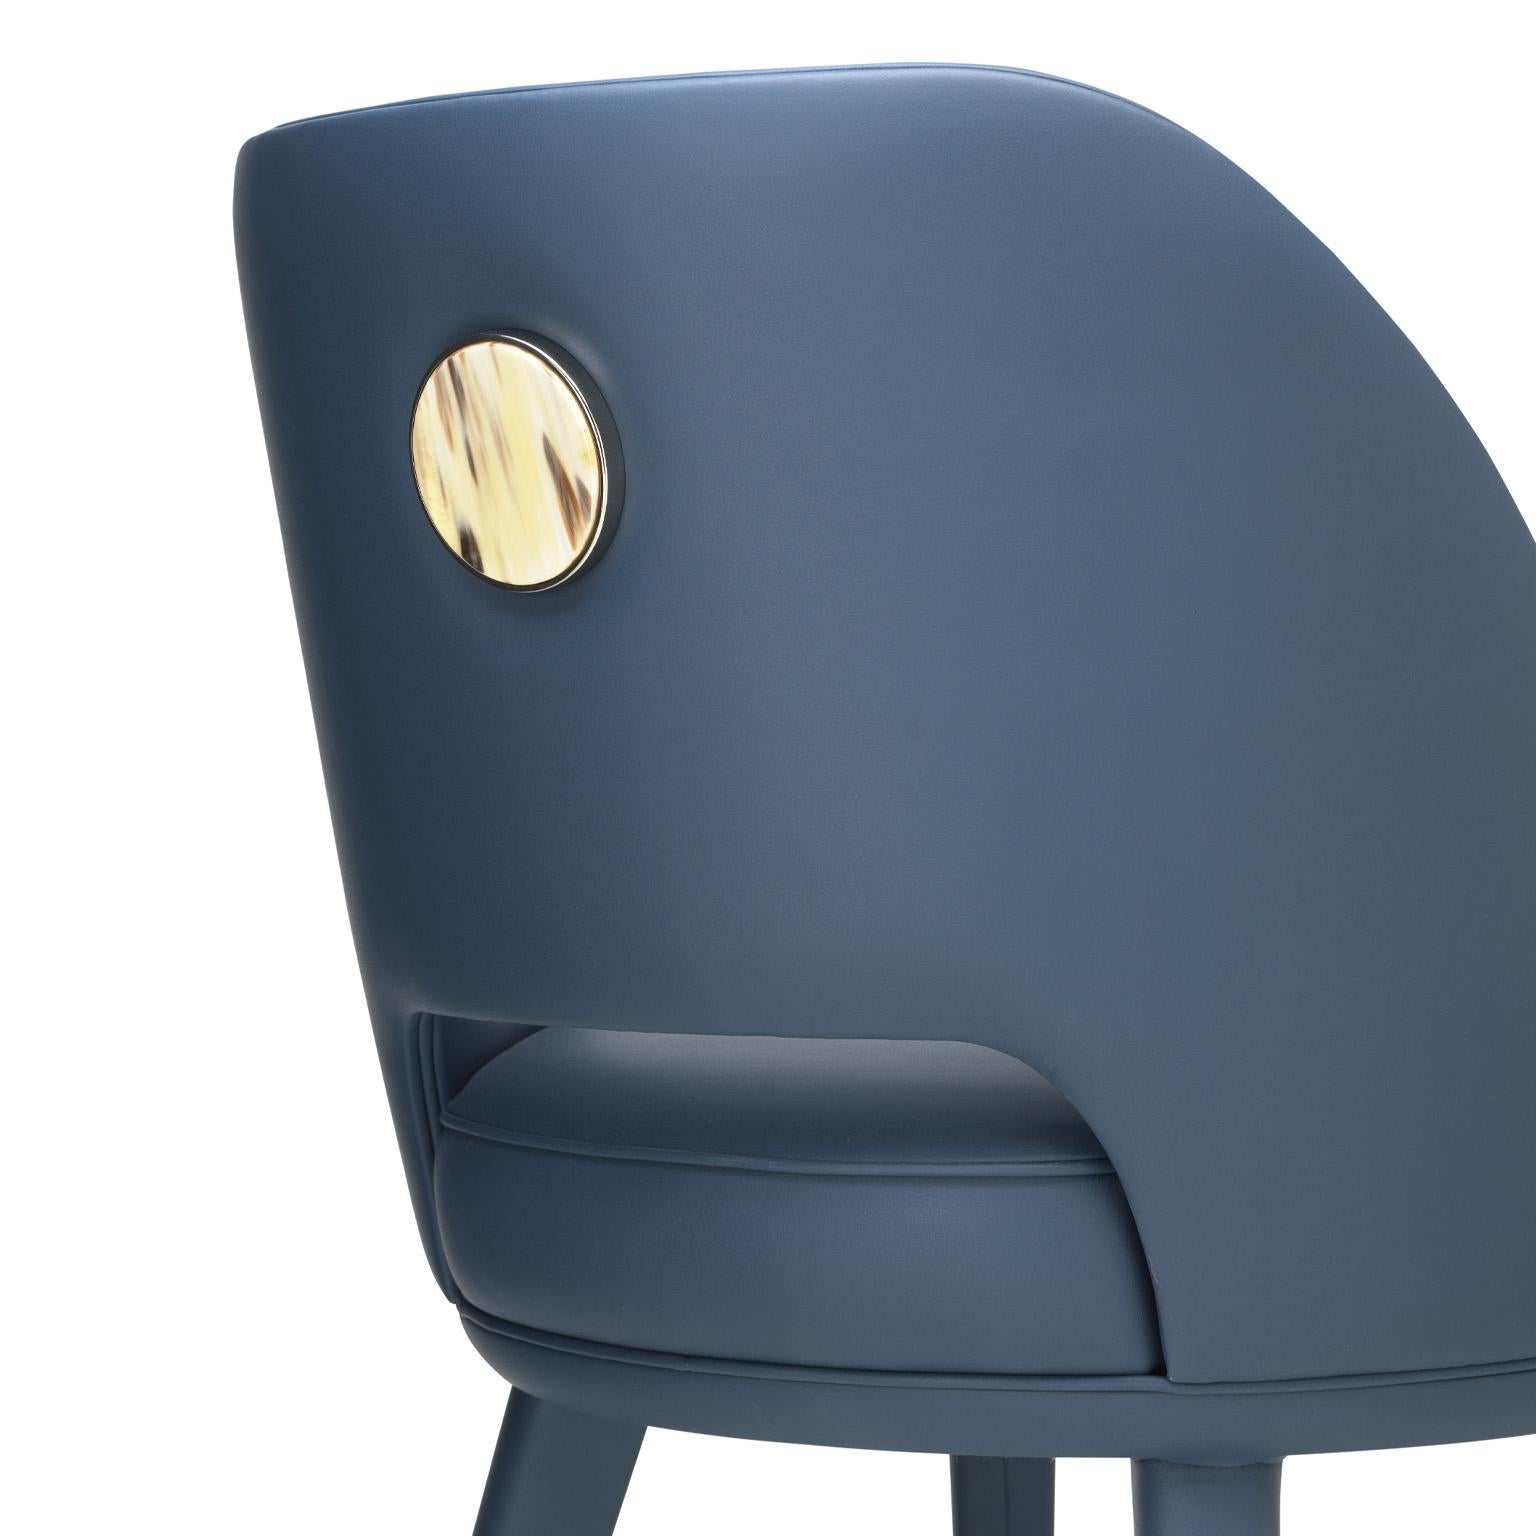 Penelope Chair in blue Tosca Leather with Detail in Corno Italiano, Mod. 4430SC In New Condition For Sale In Recanati, Macerata